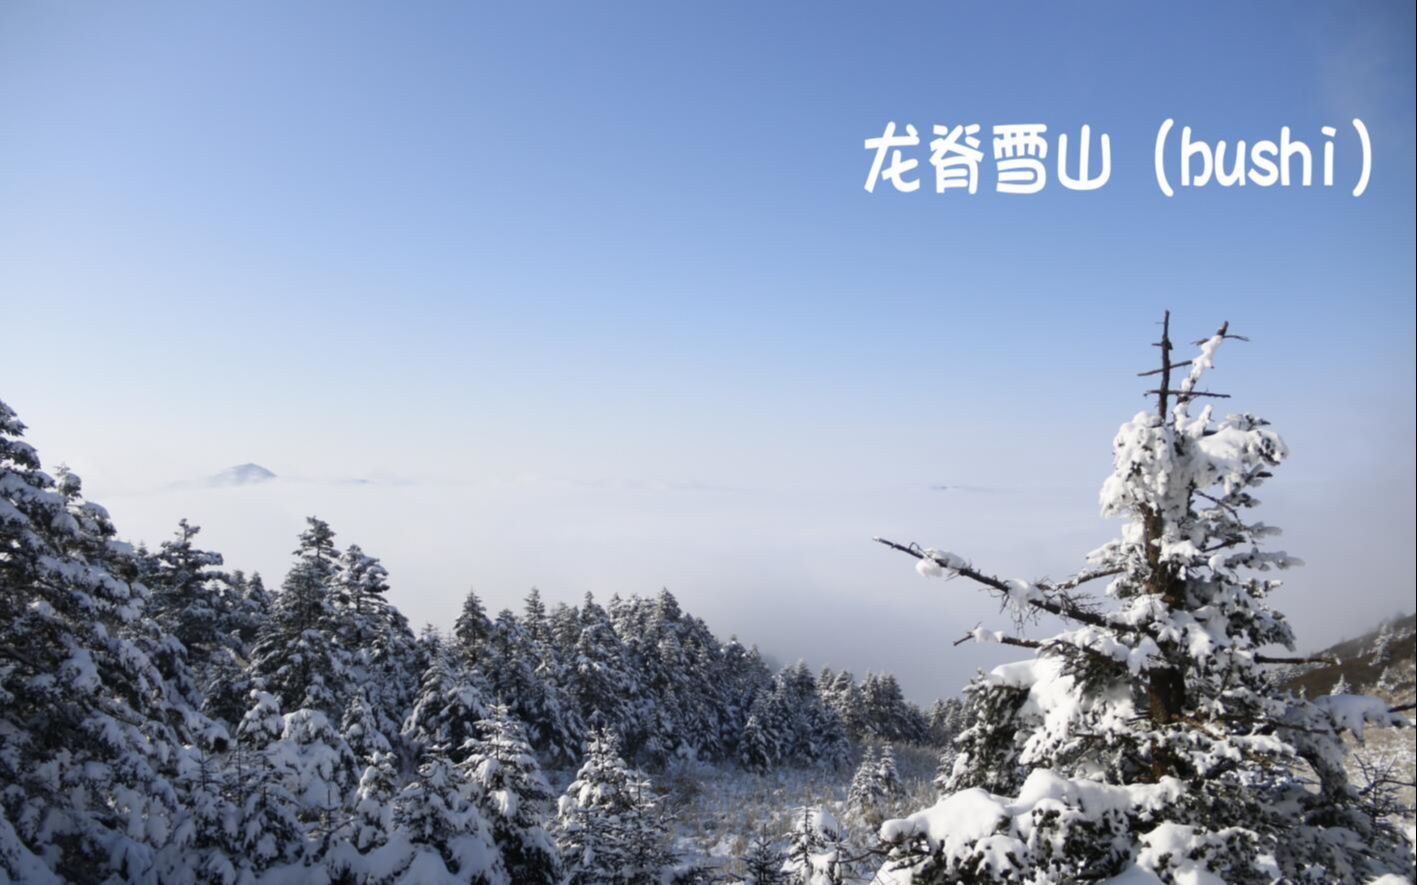 龙脊雪山(shennongjia)雪